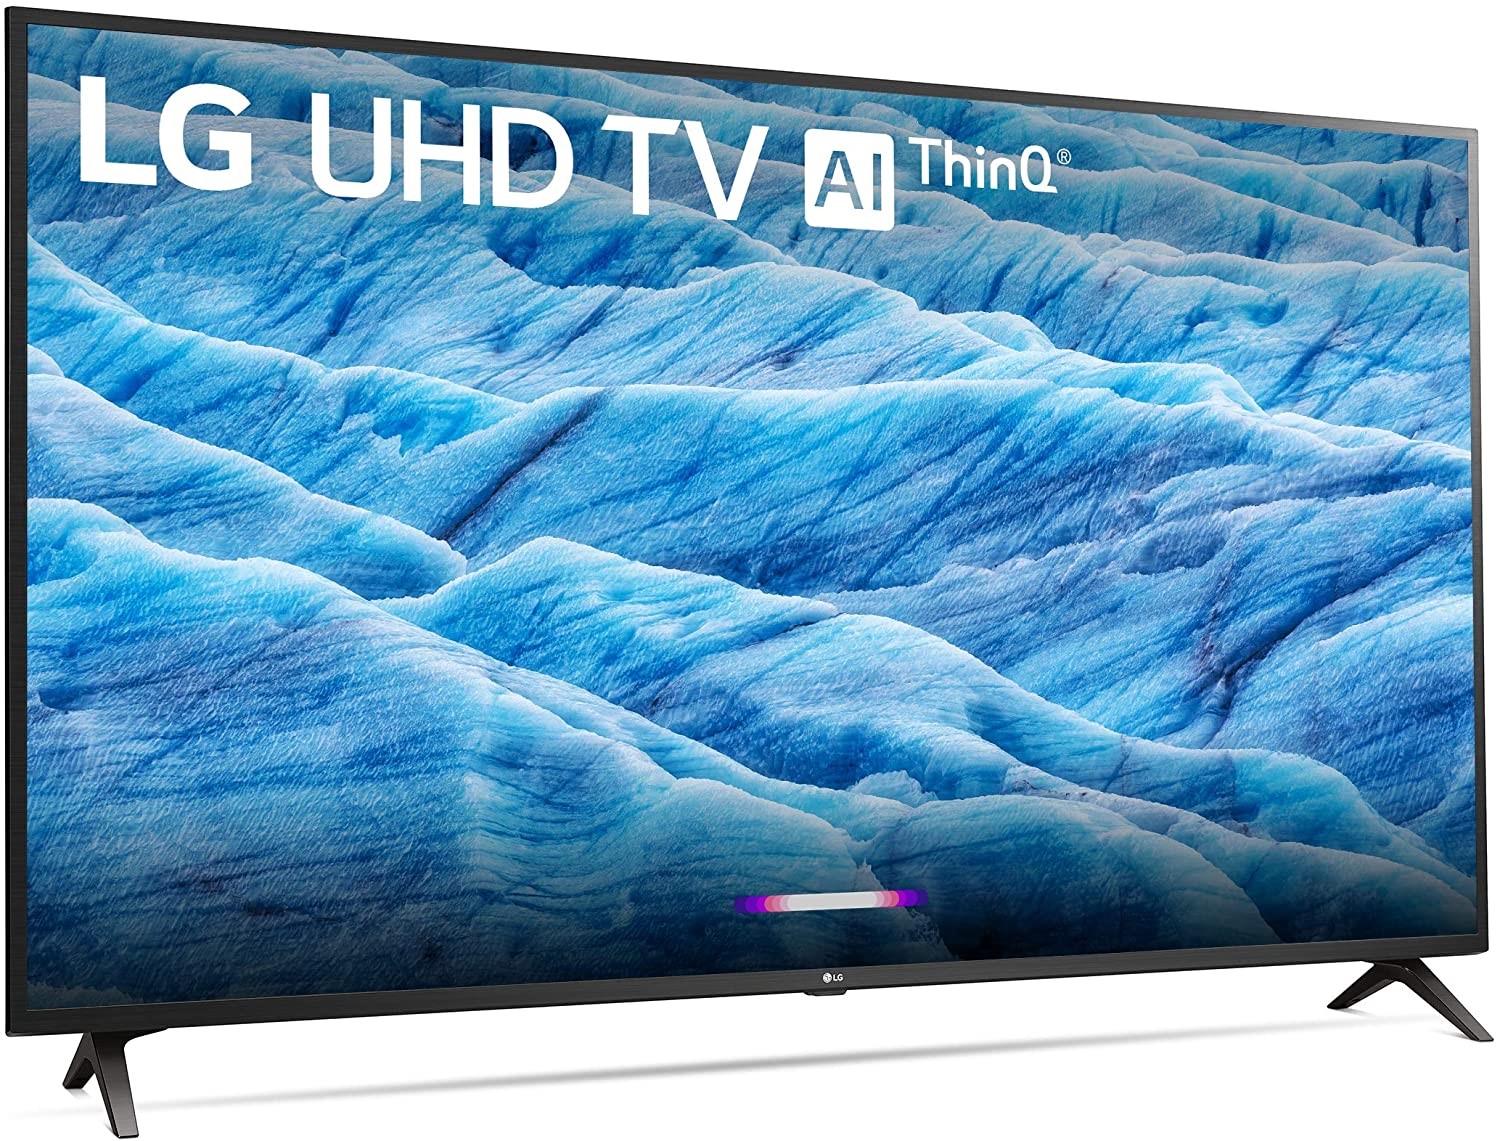 75-inch 4K UHD television